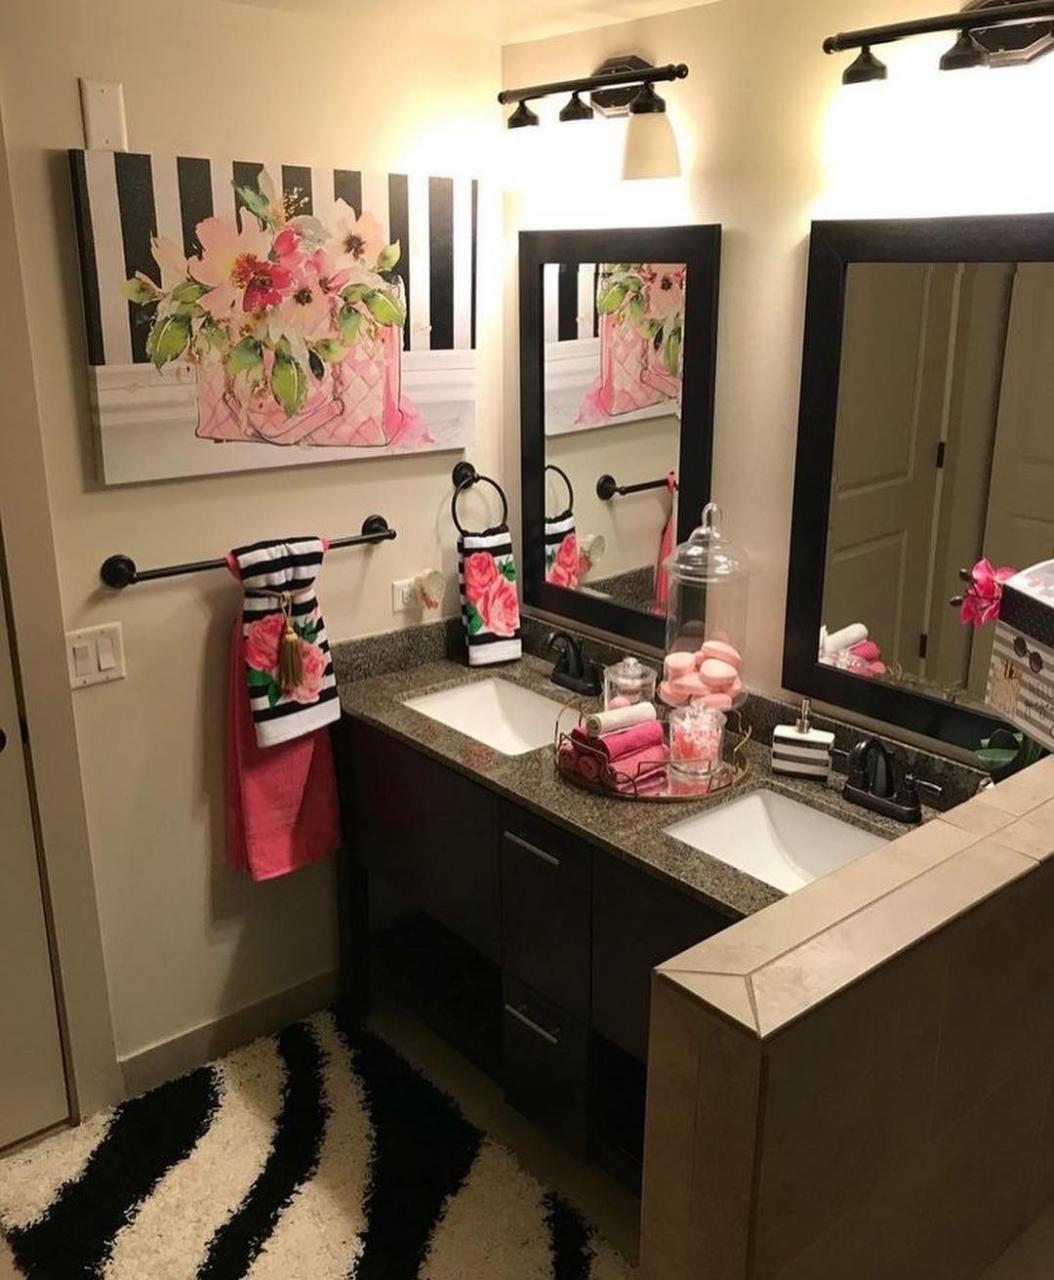 Pinterest Girly Girl Add me for More!!!😏 Bathroom decor apartment